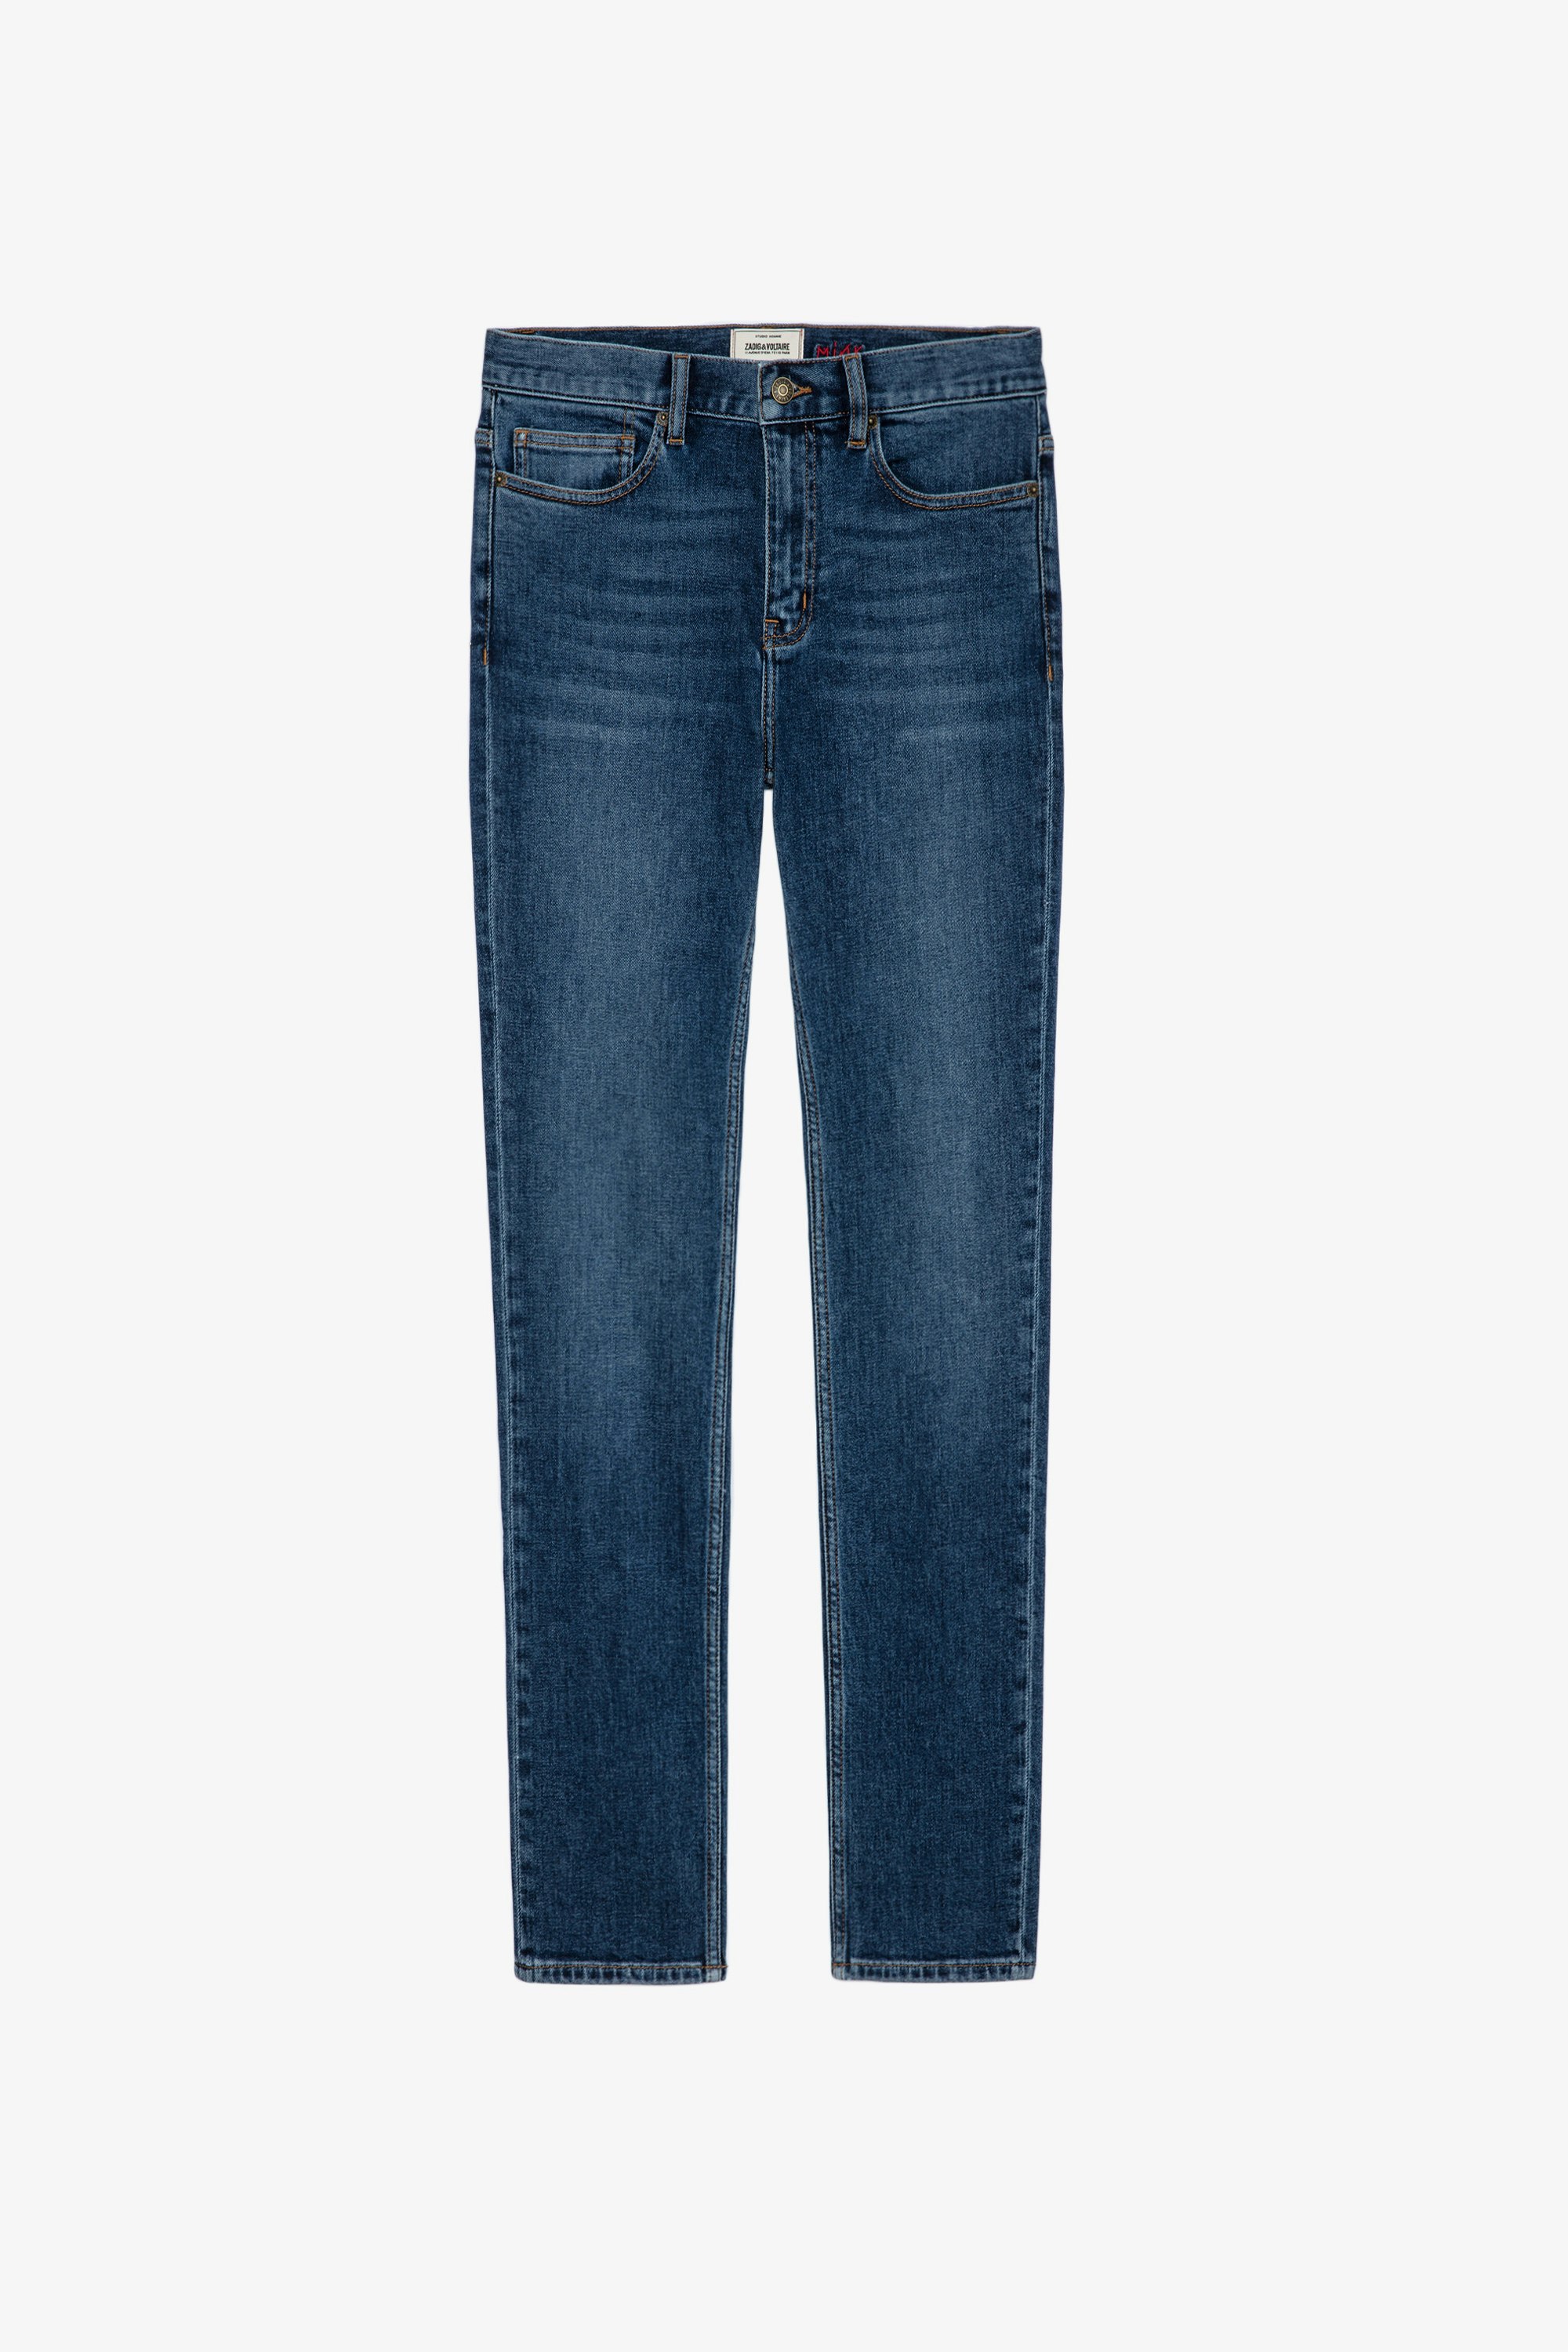 Mick Jeans Men’s slim-fit blue denim jeans